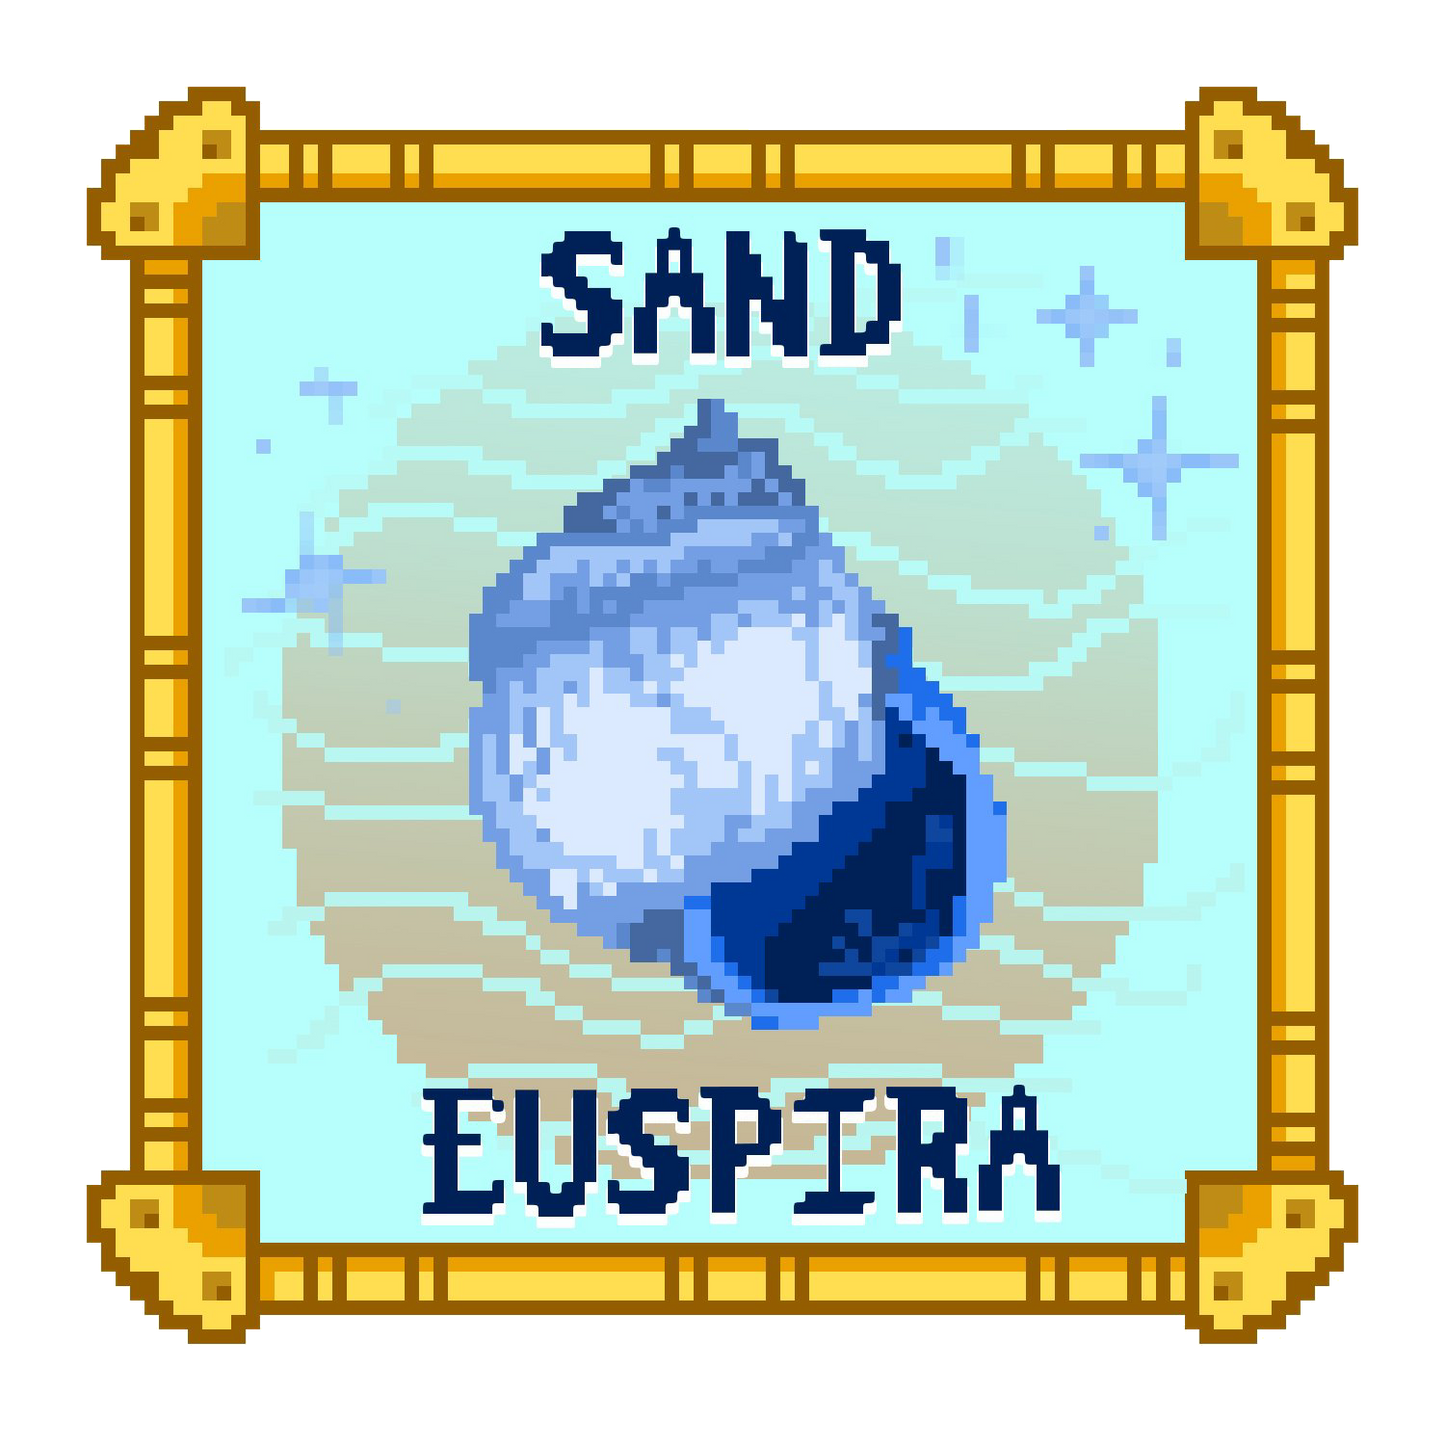 Sand Euspira